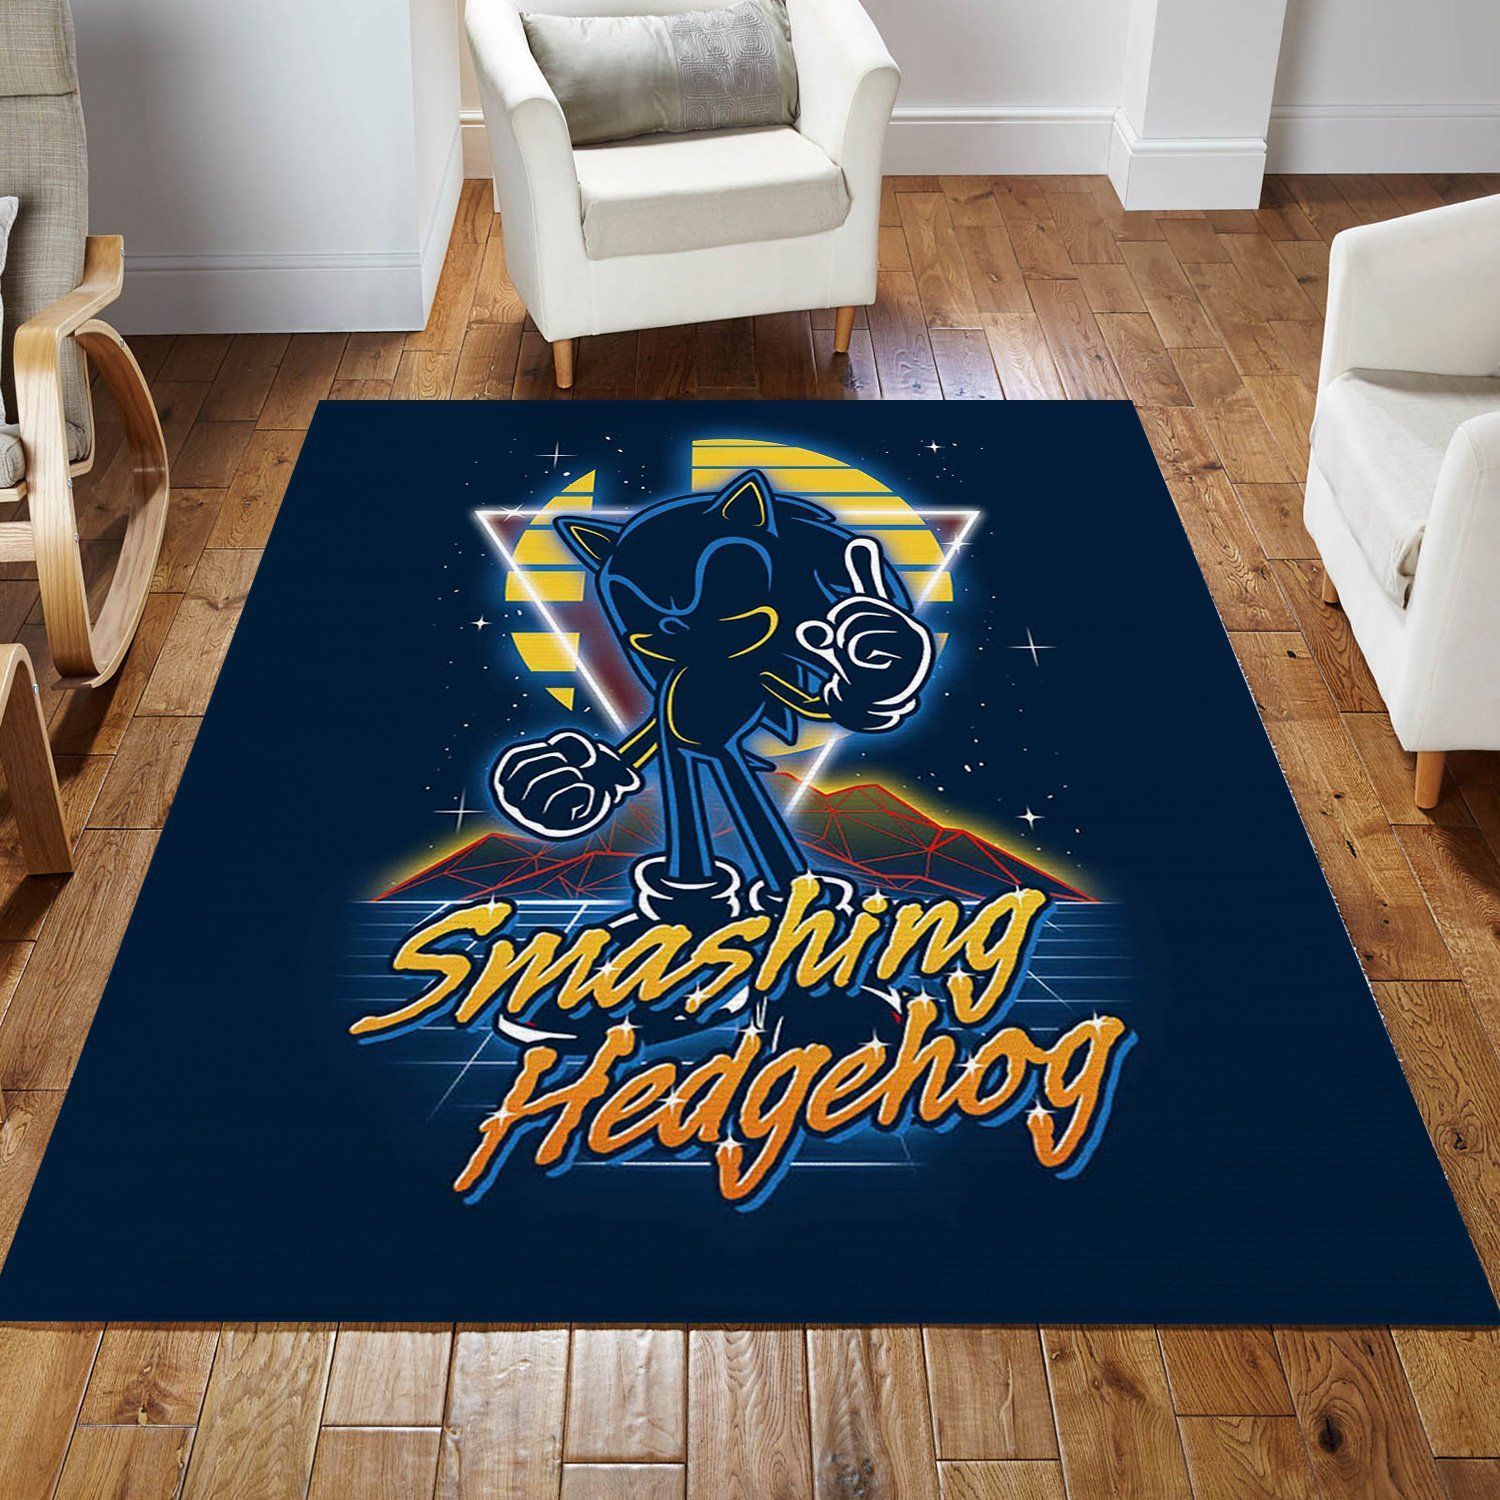 Retro Smashing Hedgehog Area Rug Carpet, Kitchen Rug, Floor Decor - Indoor Outdoor Rugs 3